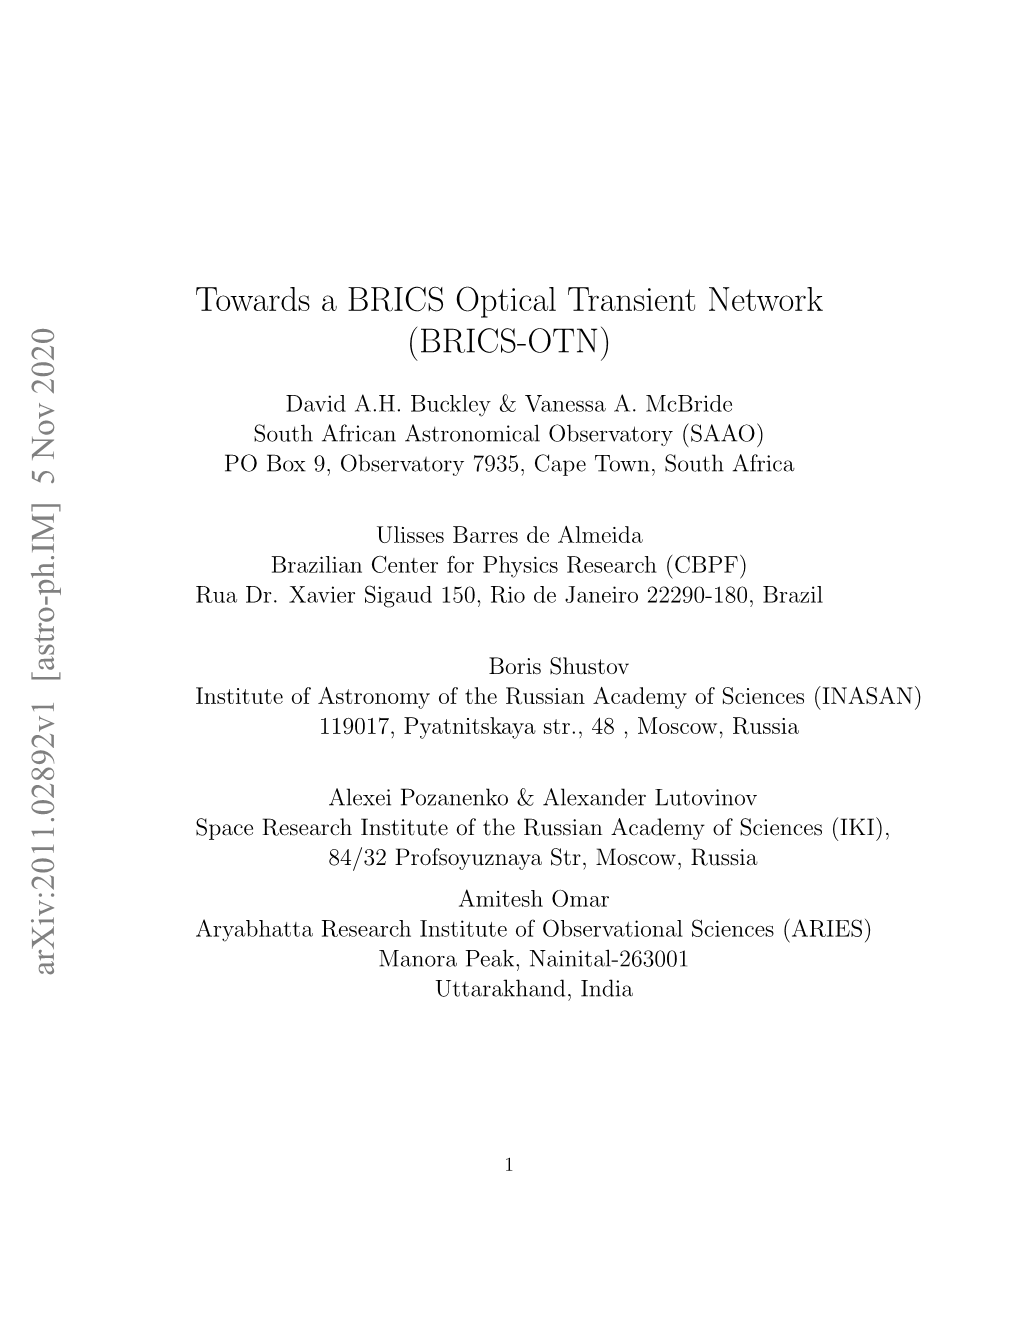 Towards a BRICS Optical Transient Network (BRICS-OTN)